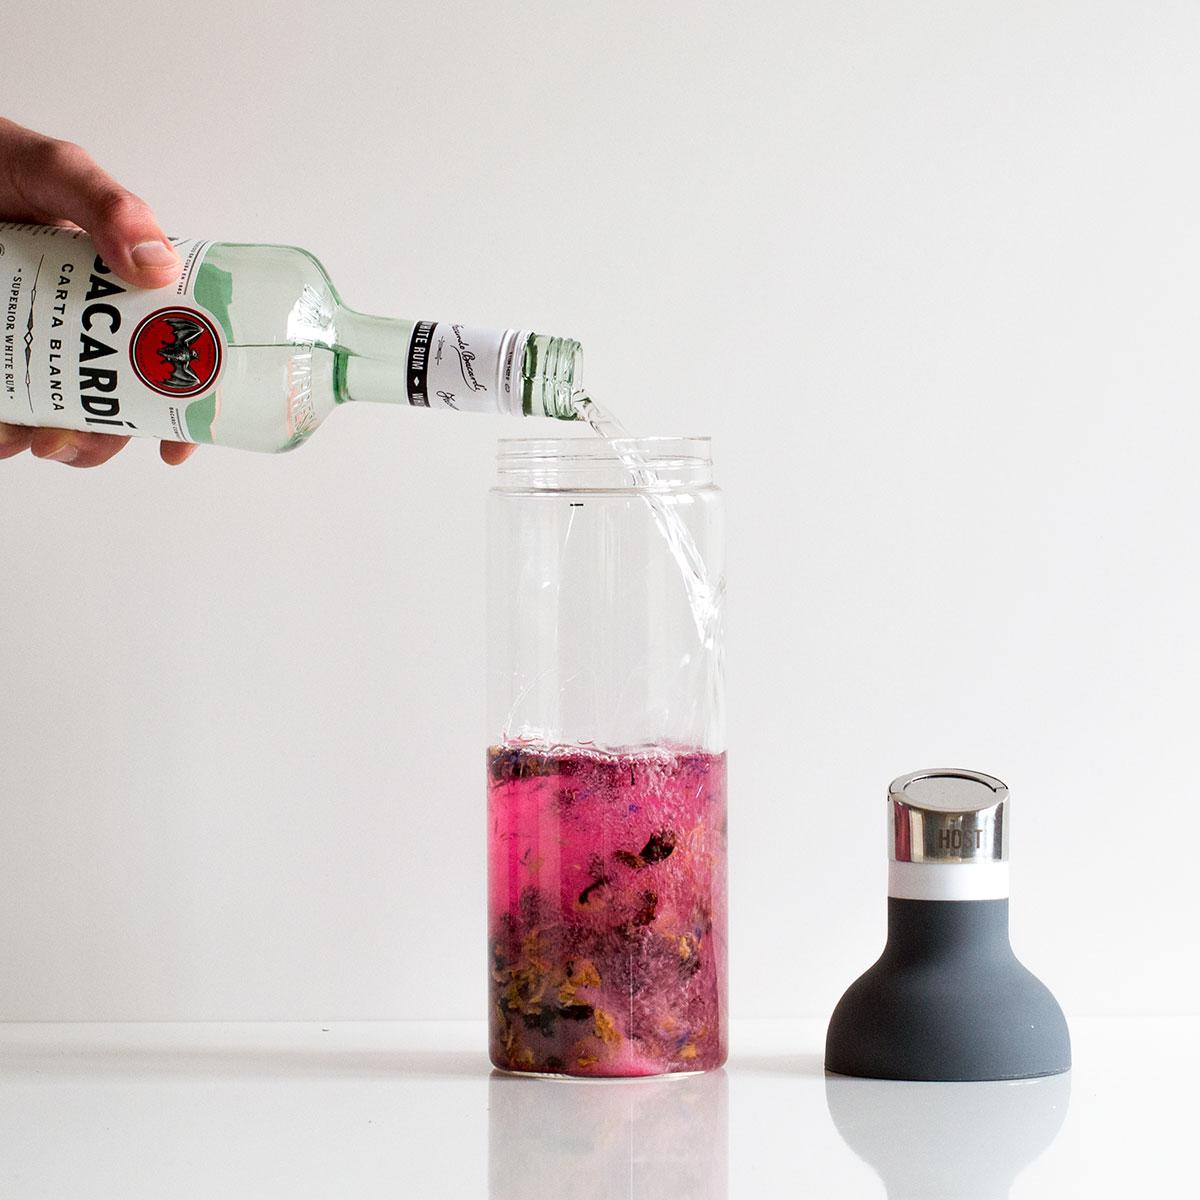 How to make Strawberry Daiquiri Cocktail